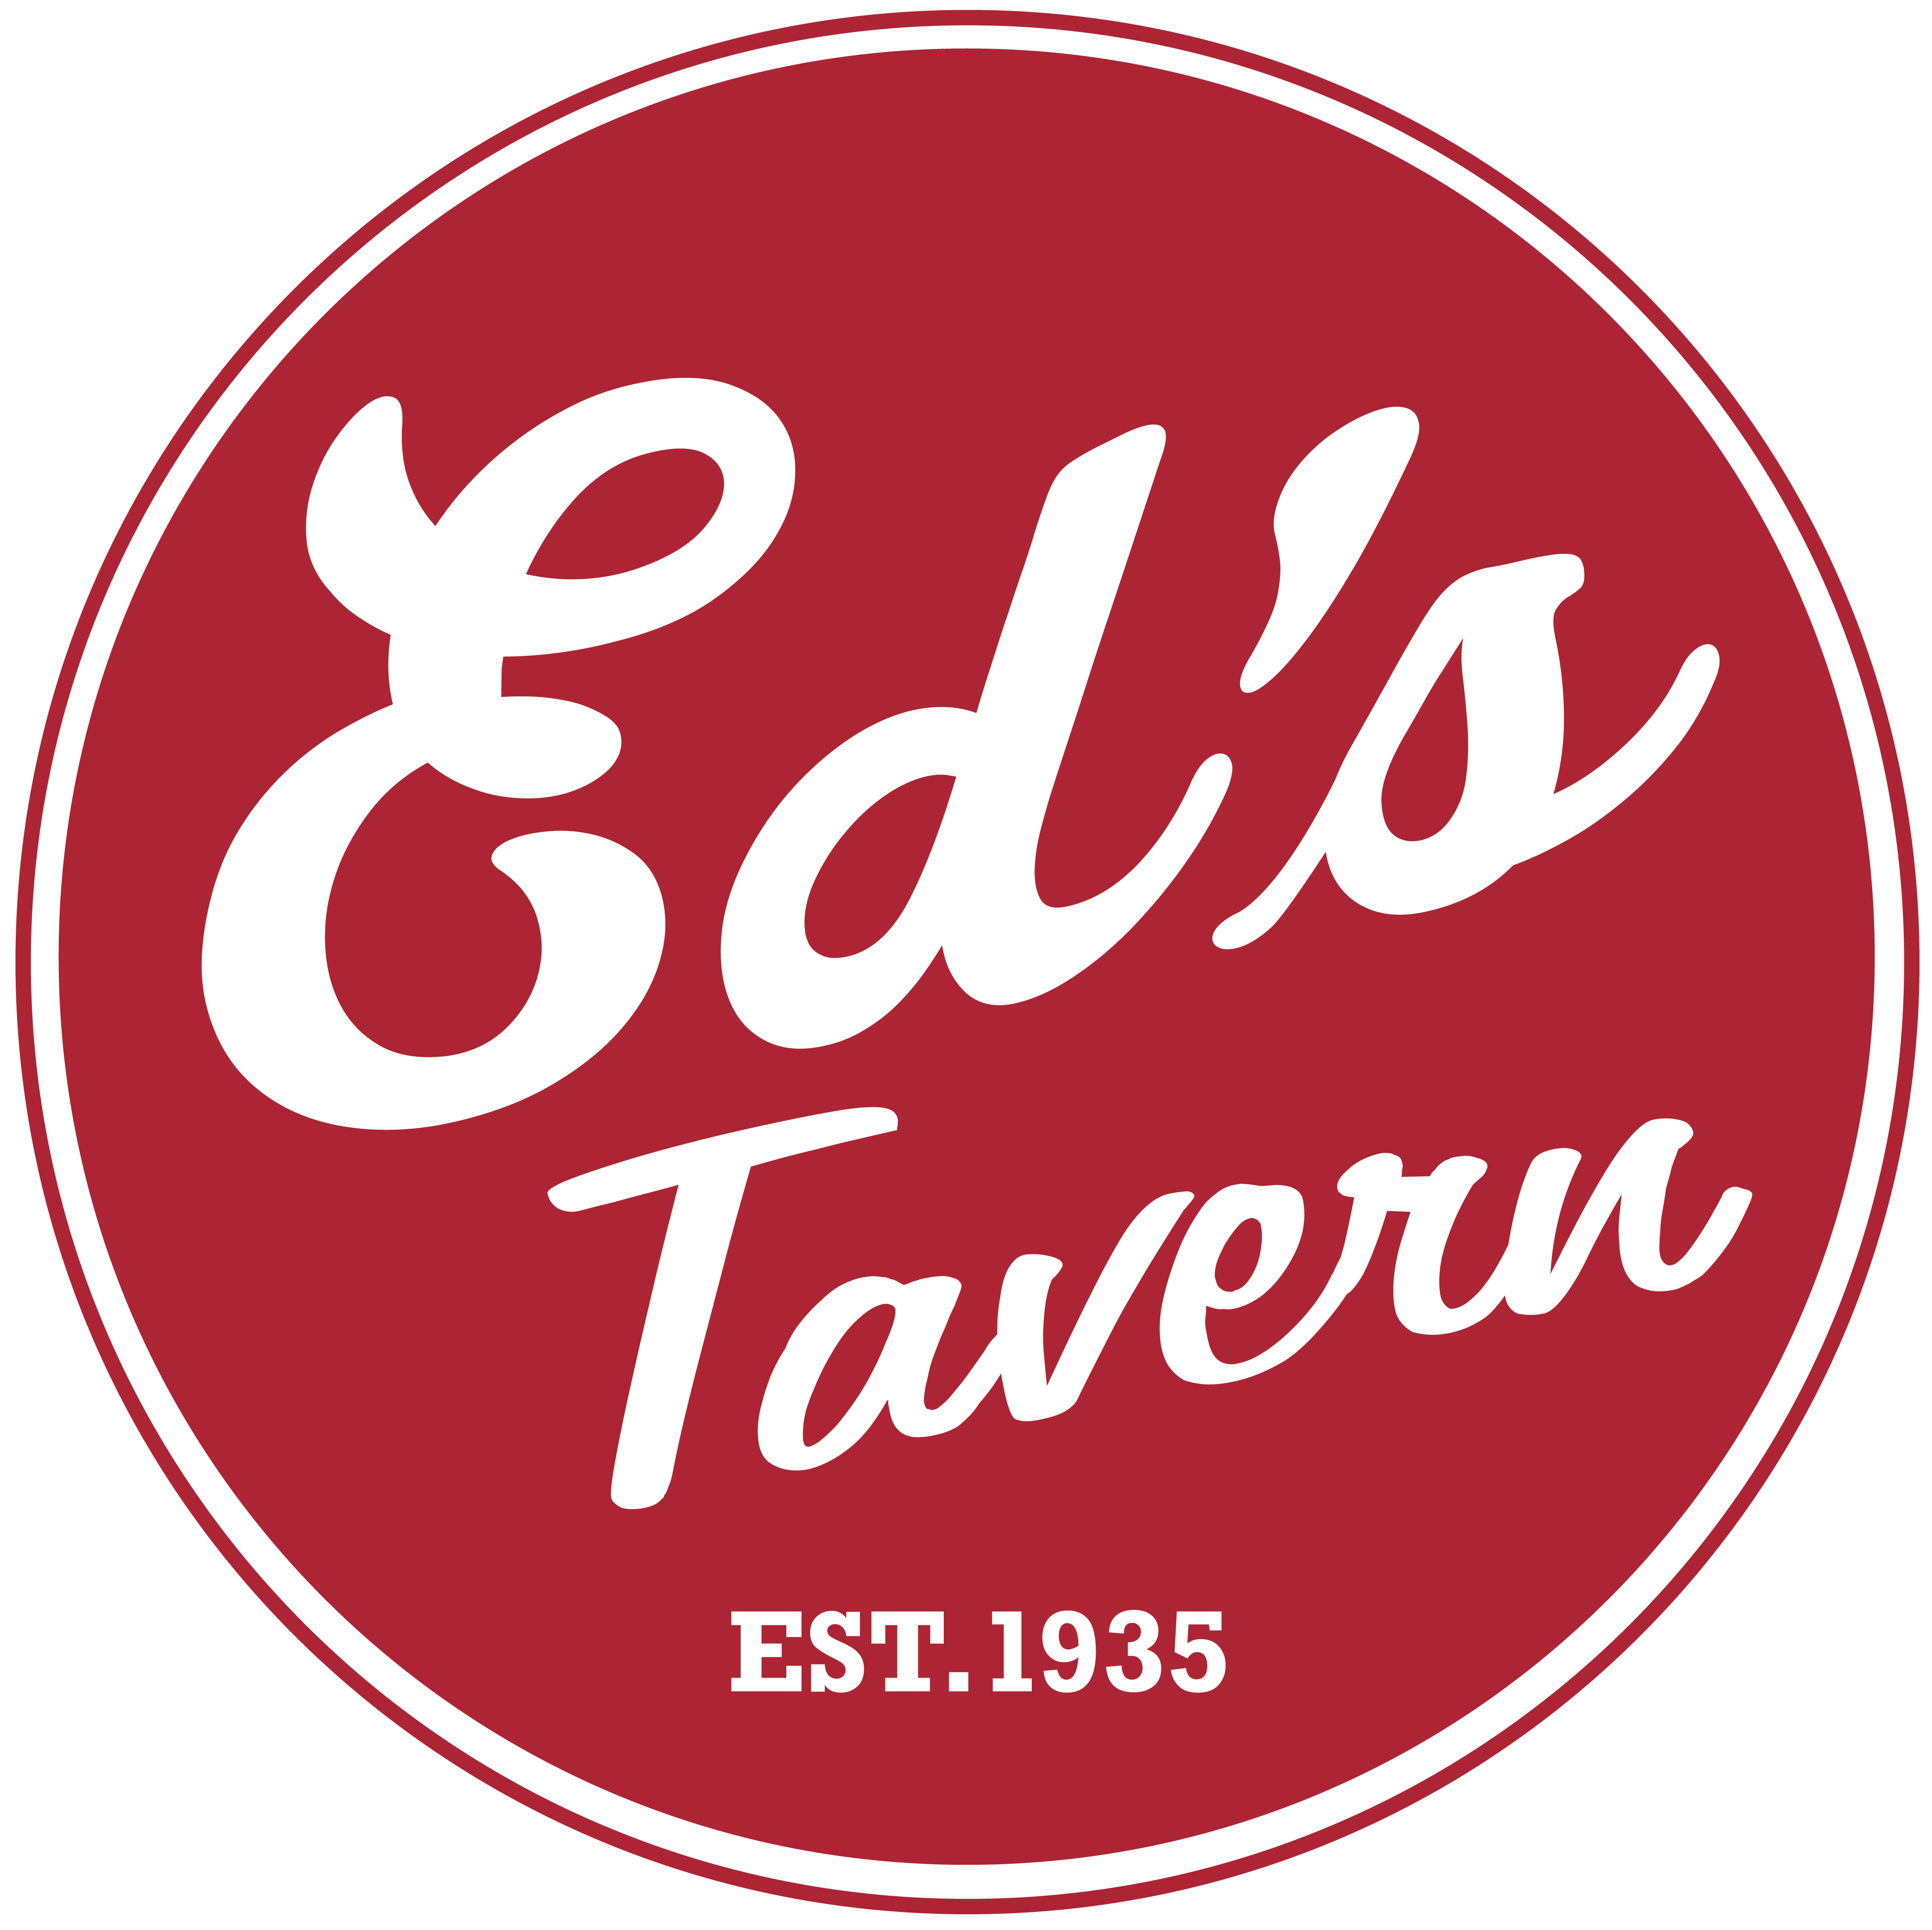 Ed's Tavern - Lake Norman